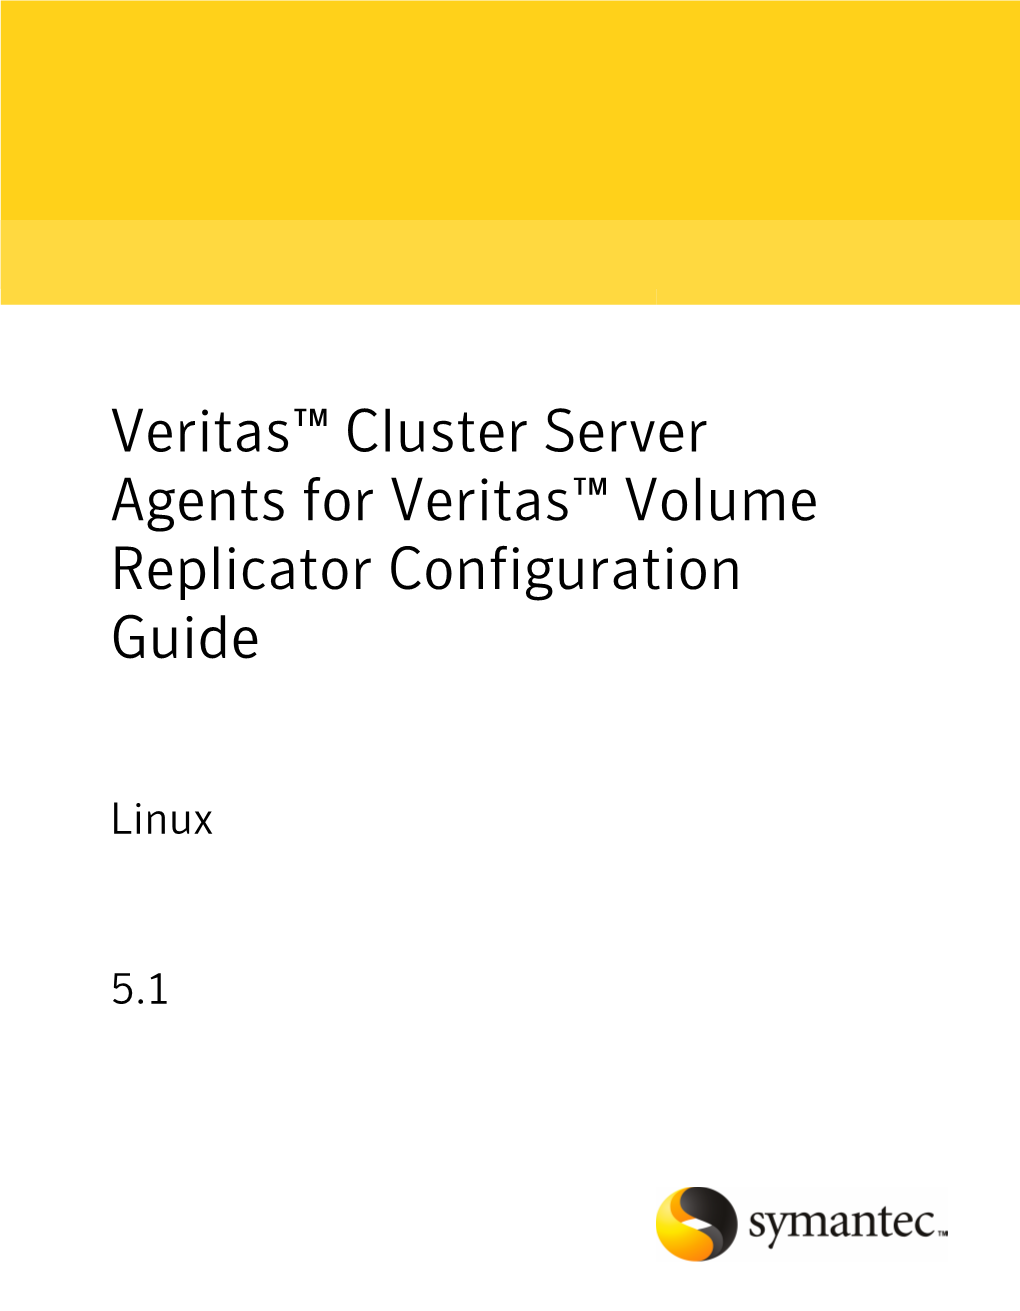 Veritas Cluster Server Agents for Veritas Volume Replicator Configuration Guide 10 Overview of the VCS Agents for VVR Introducing the VCS Agents for VVR